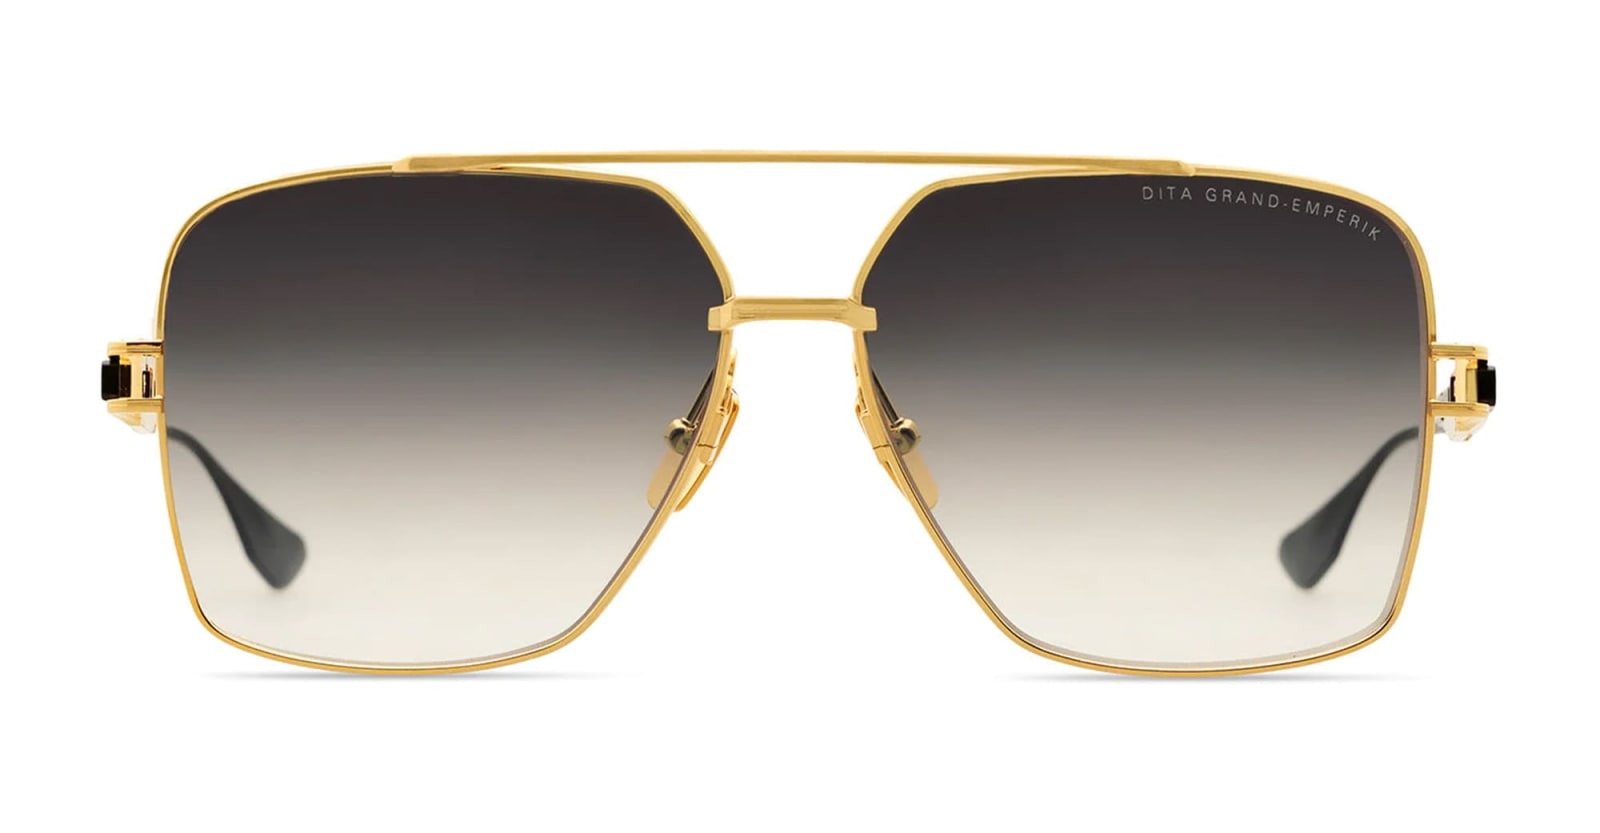 Grand-emperik - Yellow Gold / Matte Black Sunglasses